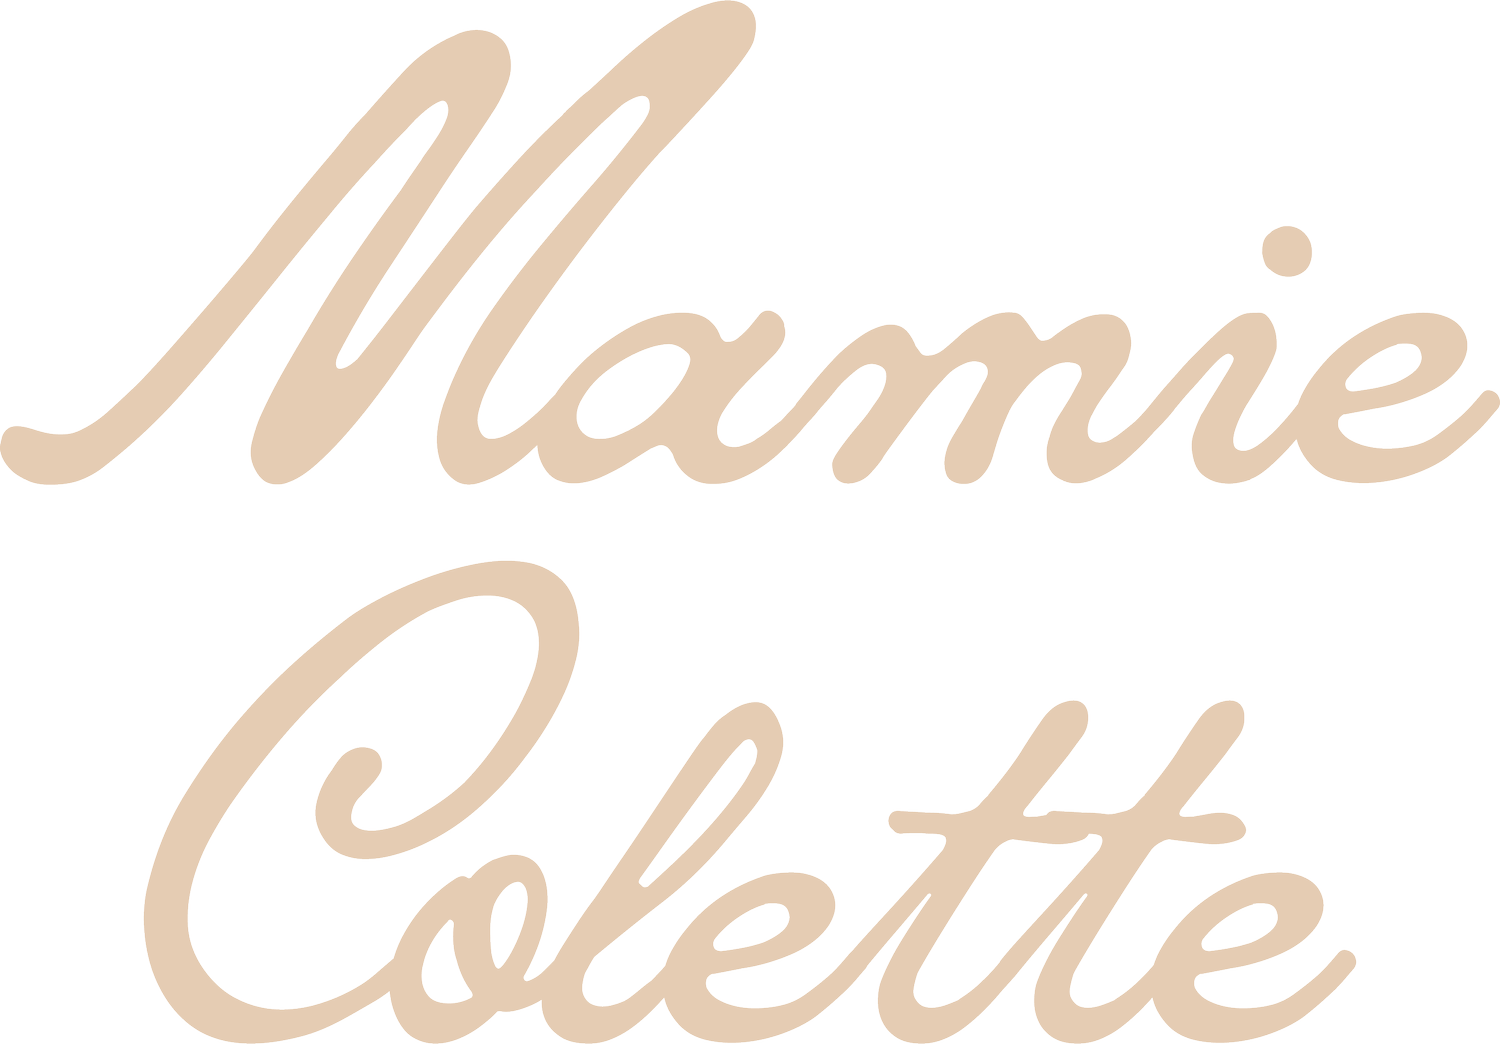 Mamie Colette